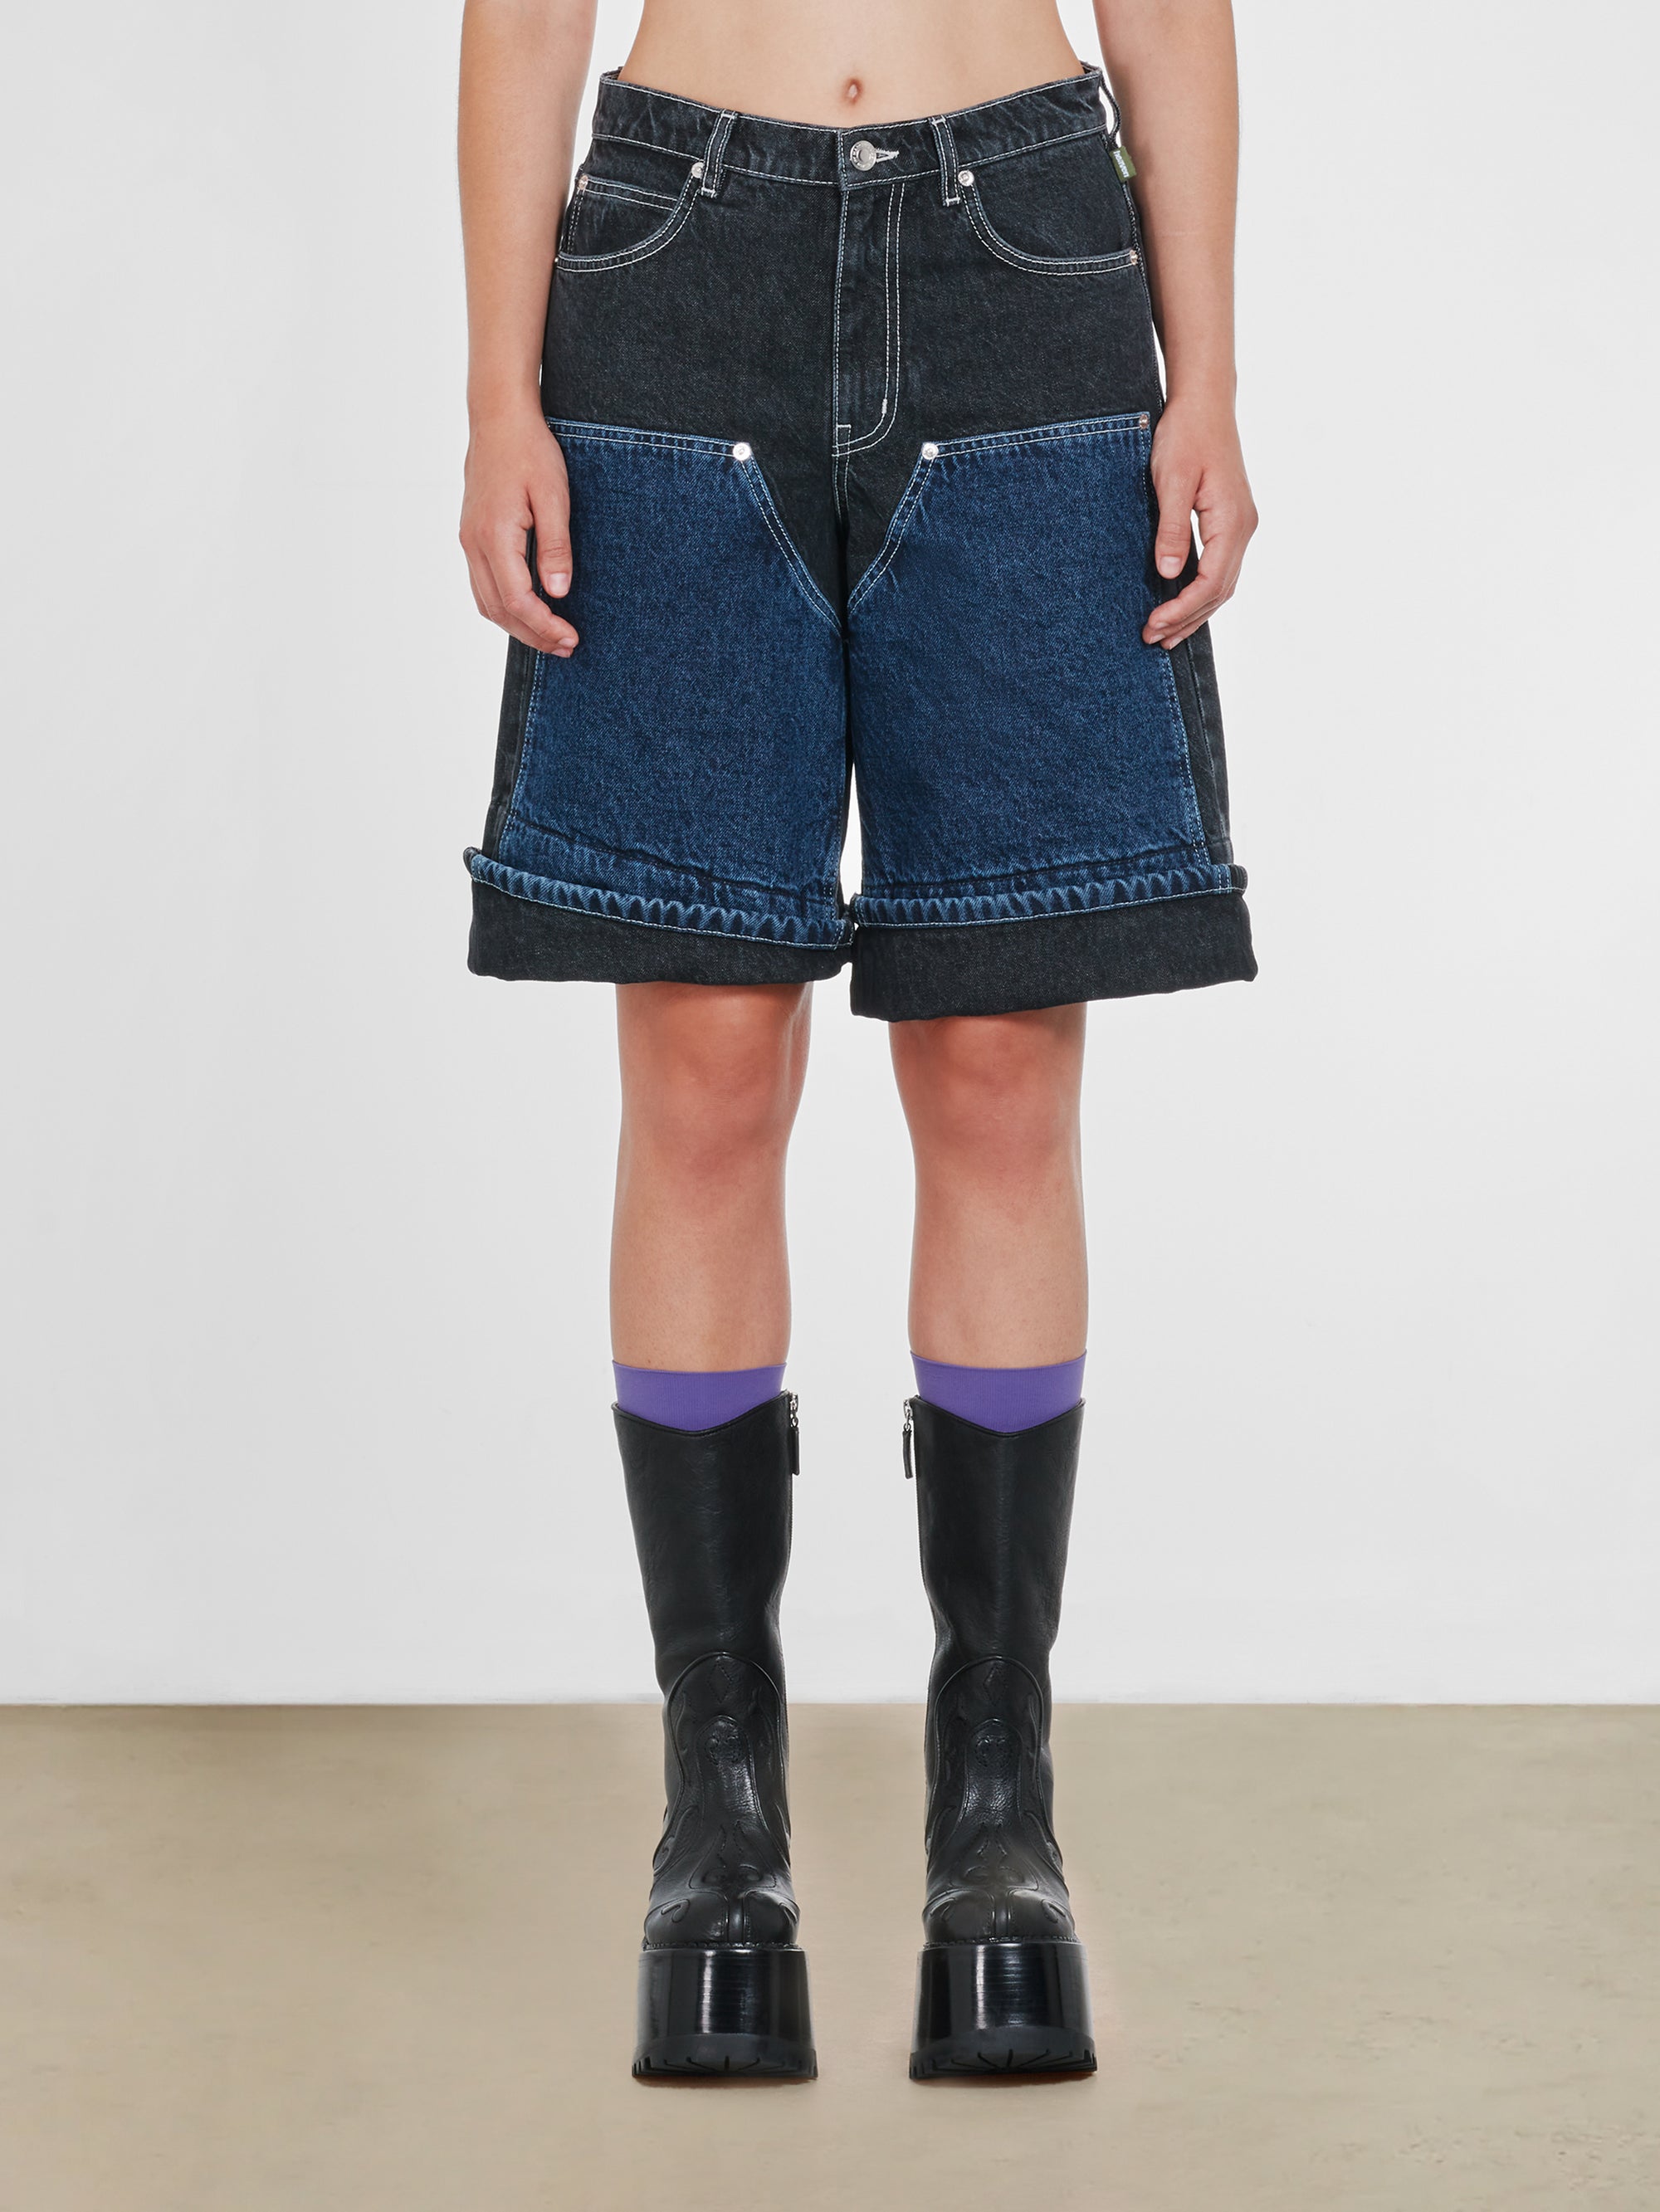 Heaven By Marc Jacobs - Women’s Cuffed Carpenter Shorts - (Indigo) view 3